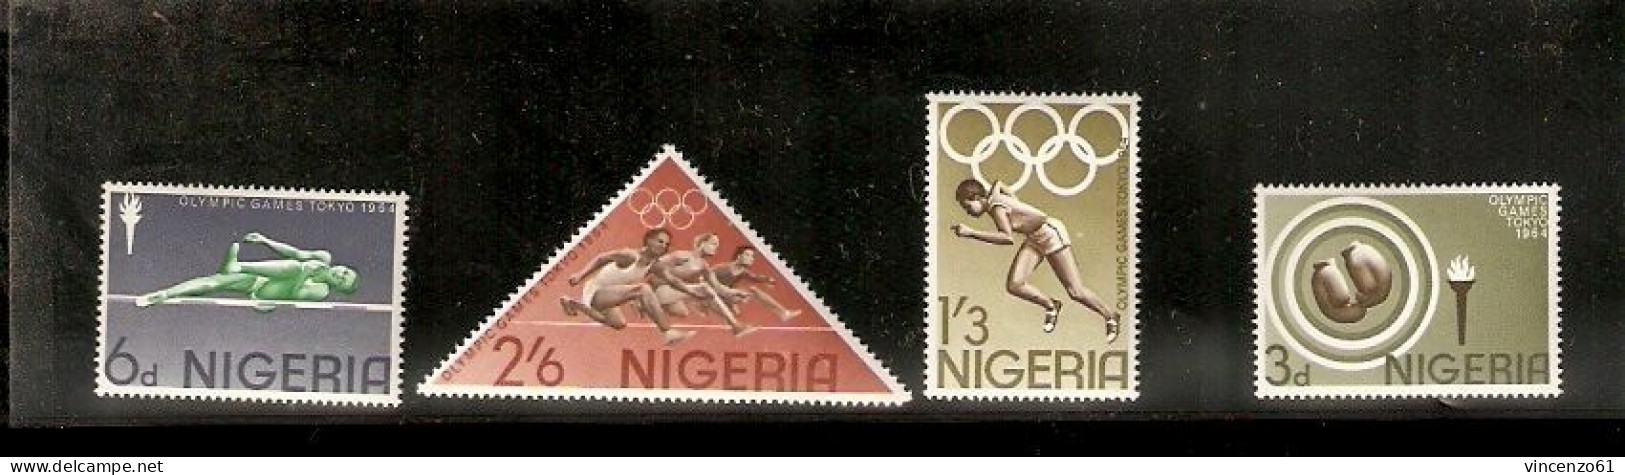 NIGERIA COMPLETE SERIE TOKIO 1964 OLIMPIC GAMES - Sommer 1964: Tokio